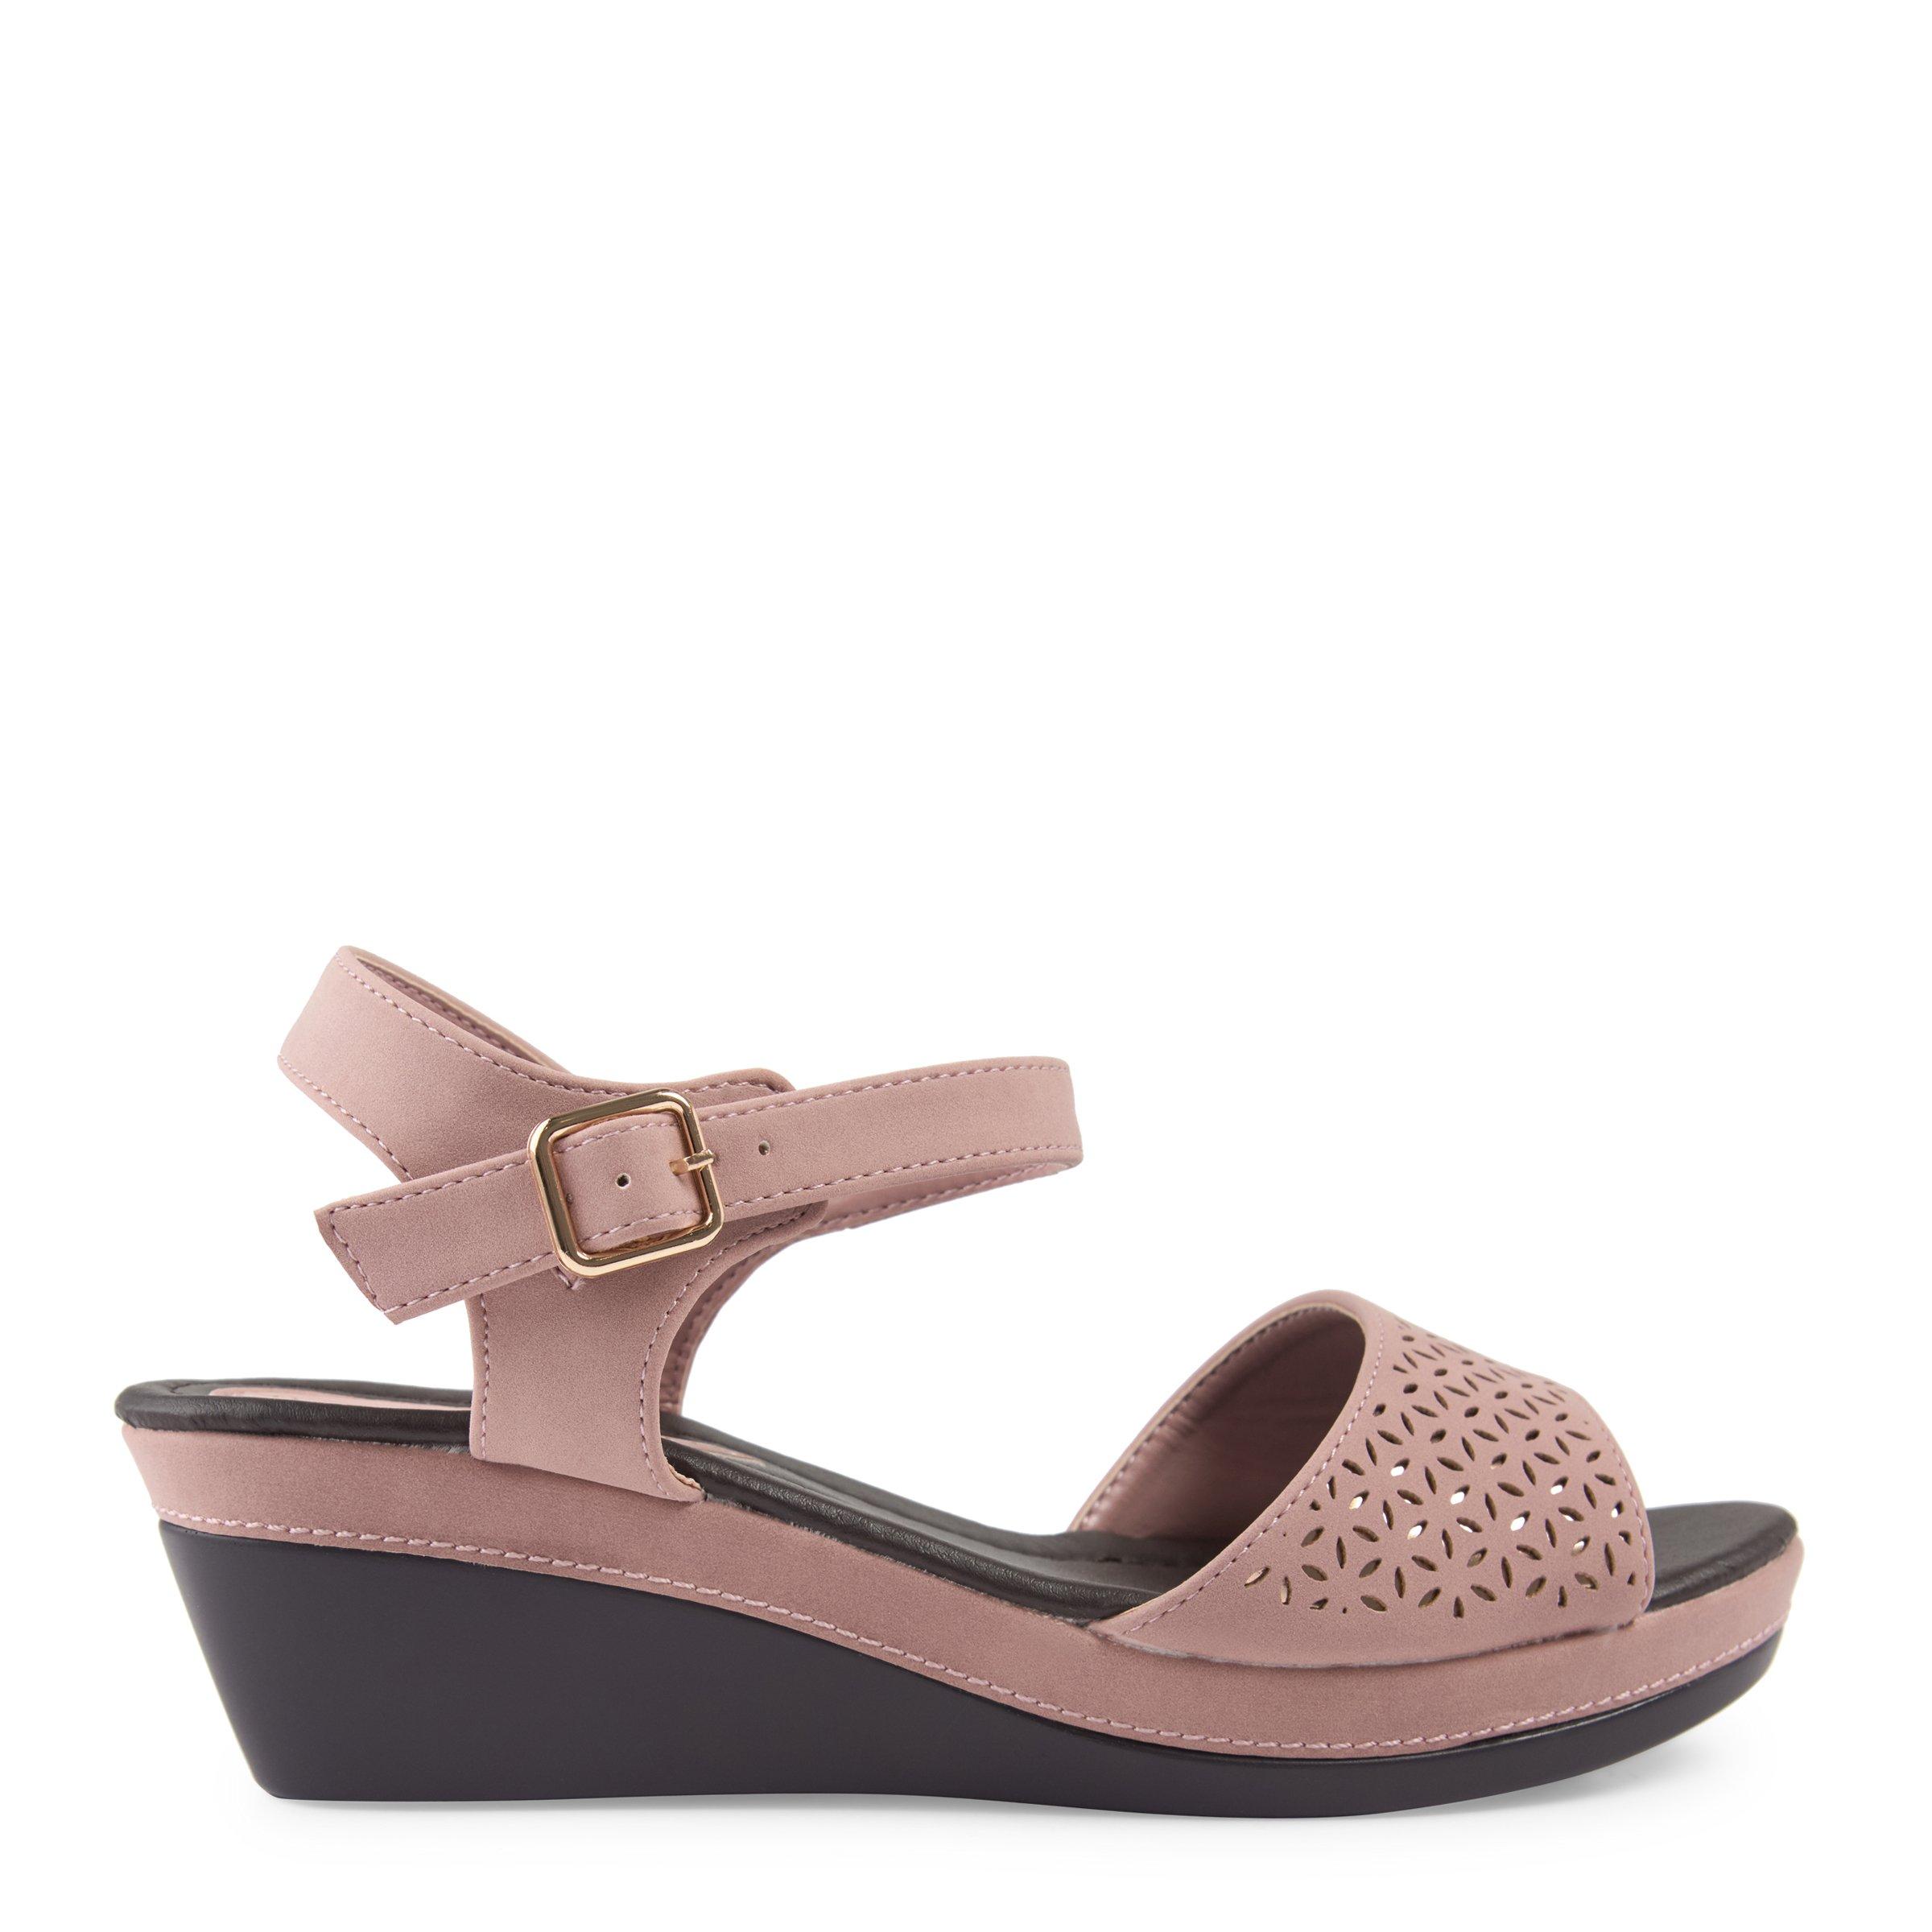 Buy Truworths Pink Wedge Sandal Online | Truworths